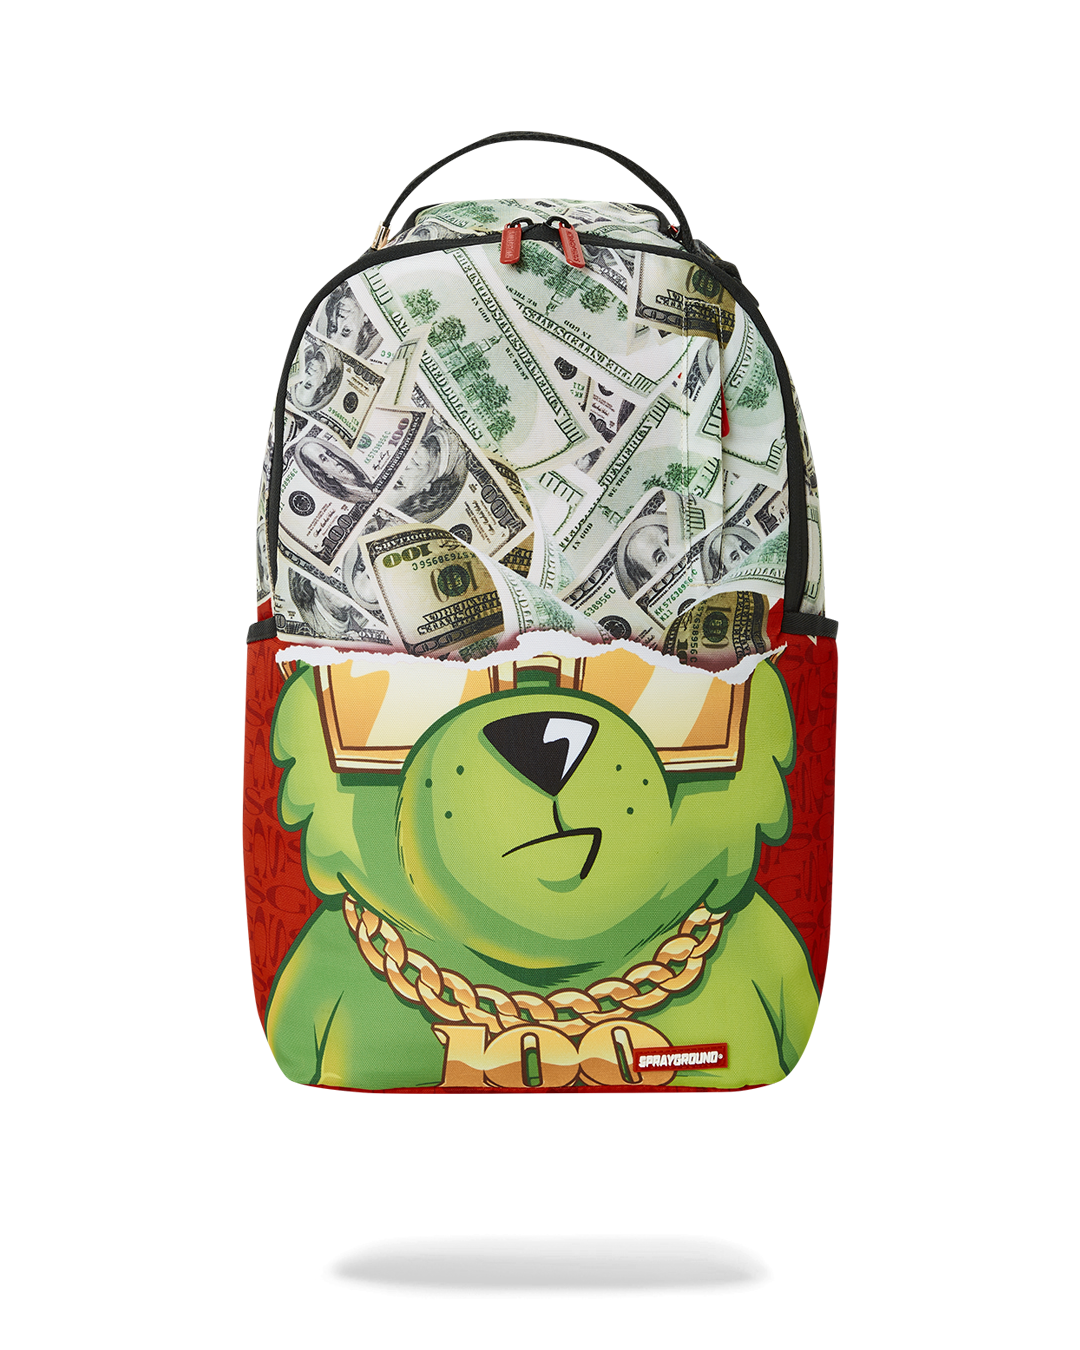 Money Bear backpack, Sprayground